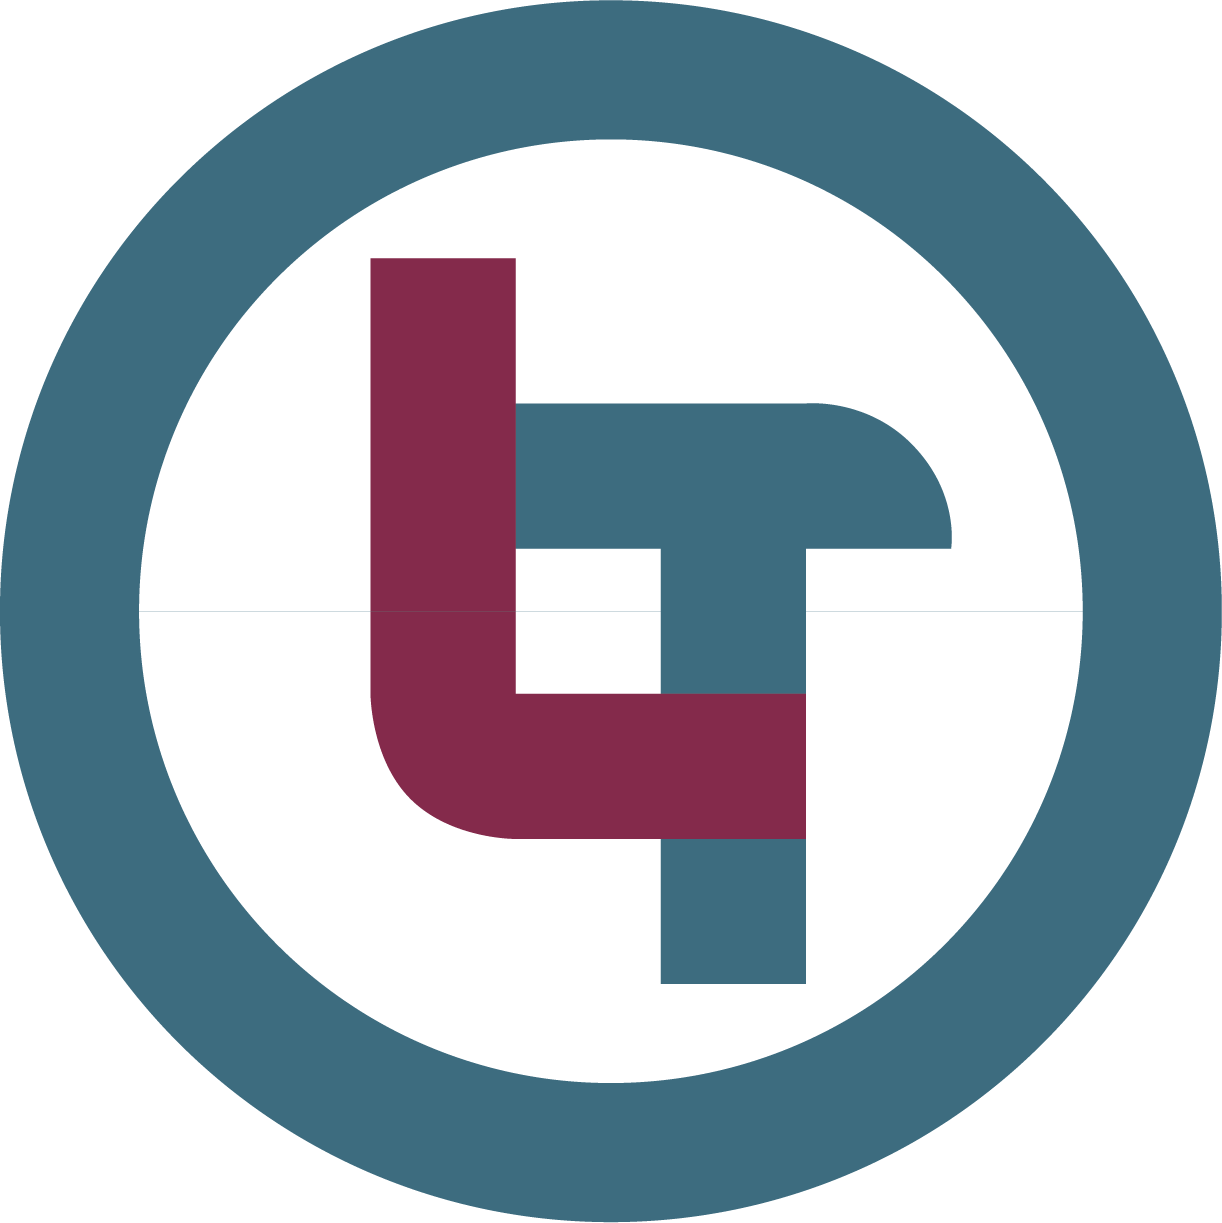 Lt Logos